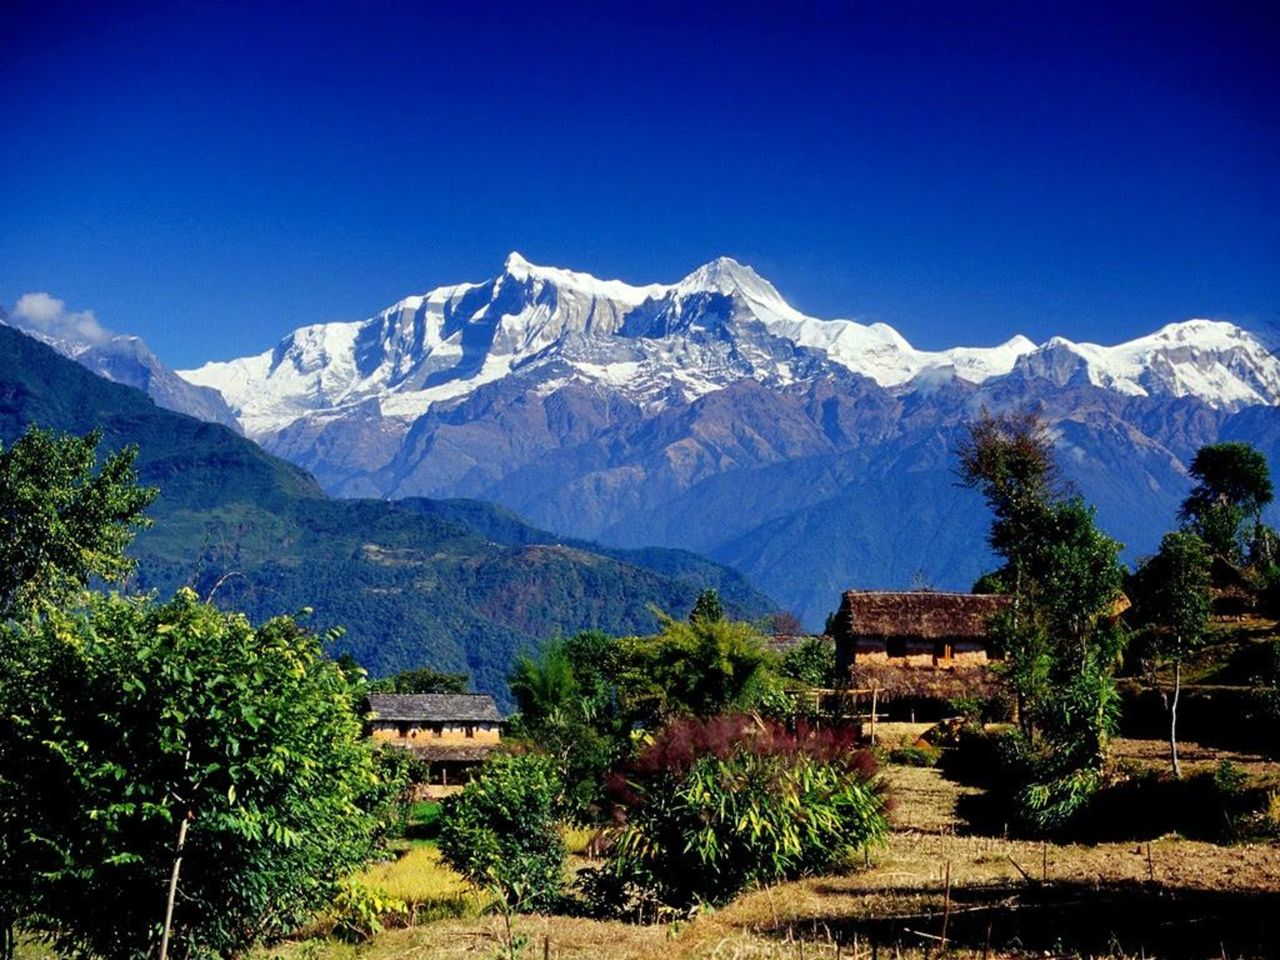 Breathtaking scenery of Nagarkot, Nepal